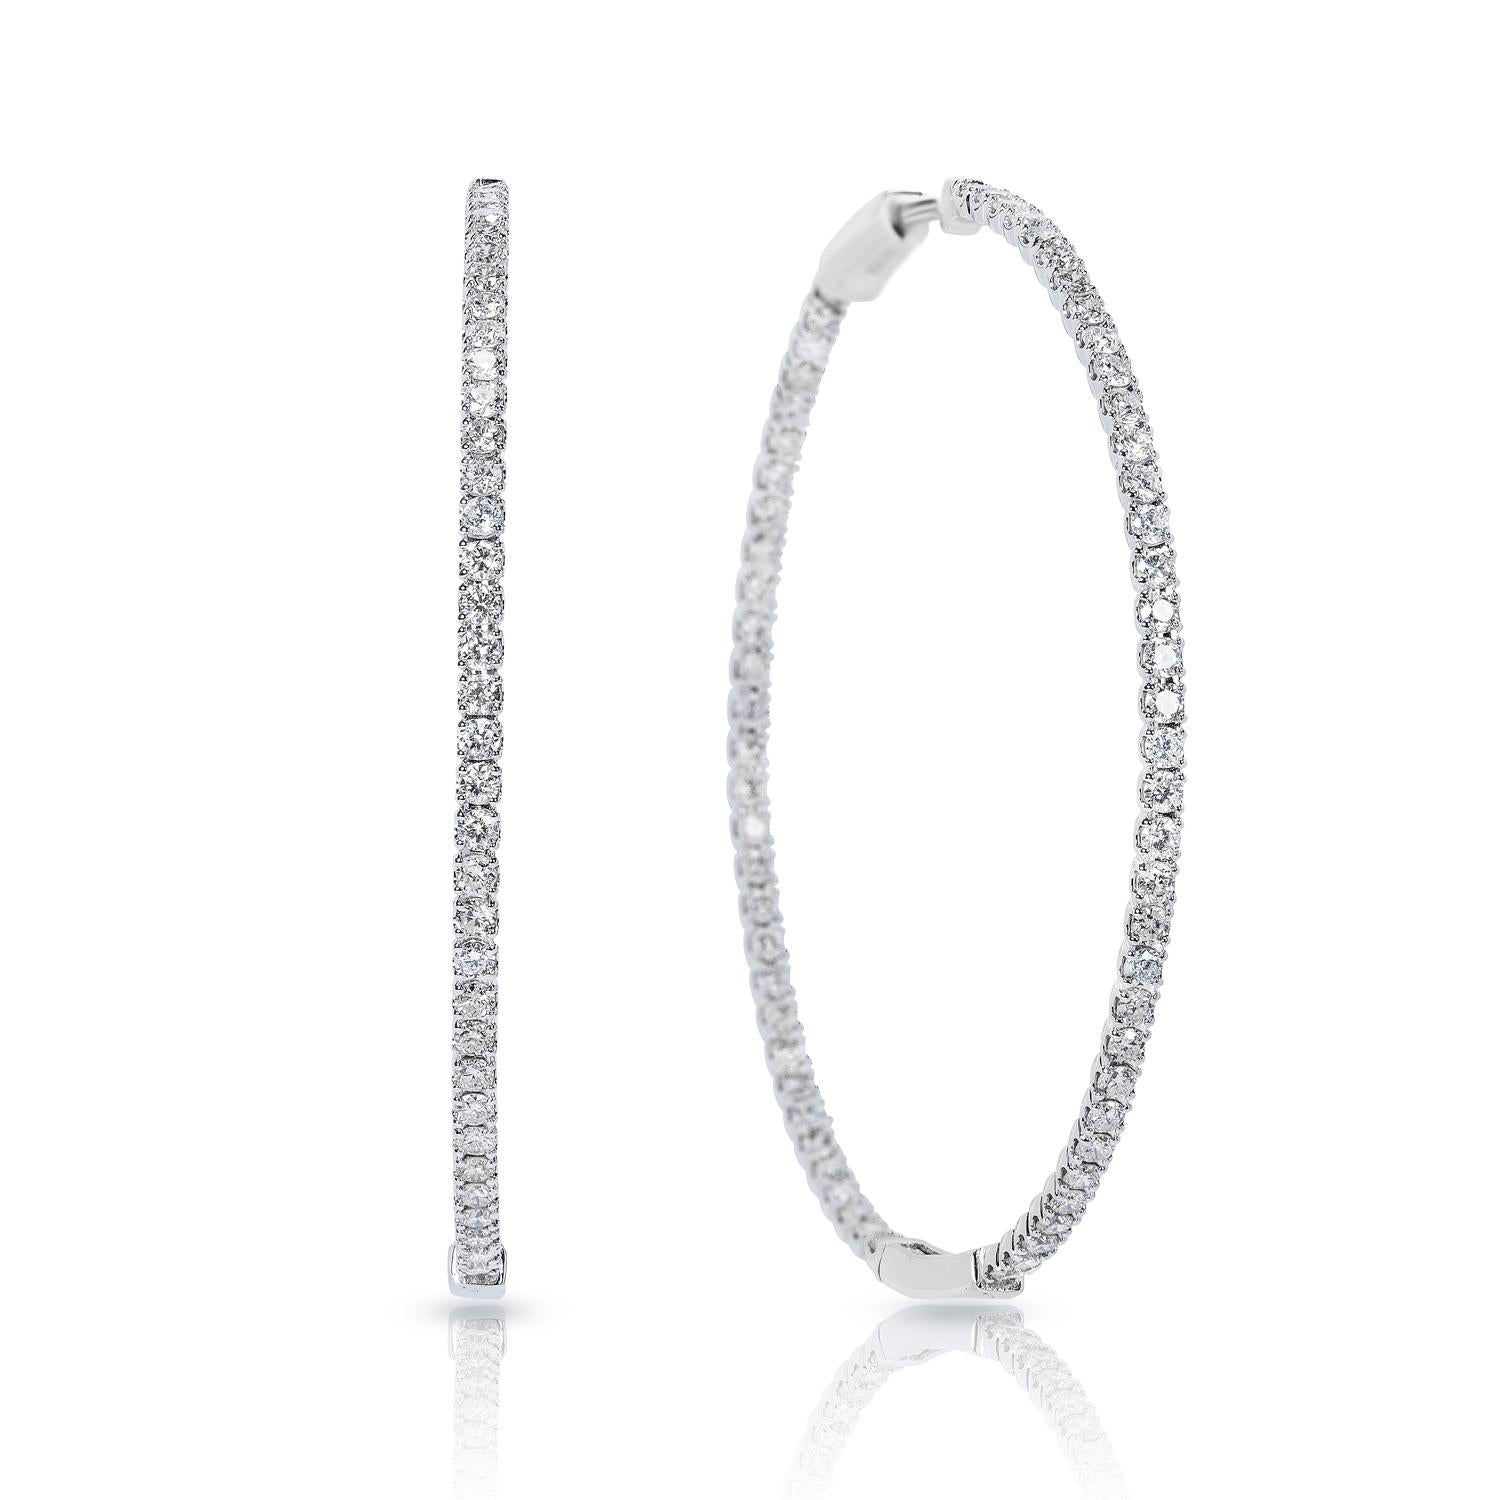 Diamond Hoop Earrings:

Carat Weight: 3.75 Carats
Shape: Round Brilliant Cut
Metal: 14 Karat White Gold
Style: Hoop Earrings